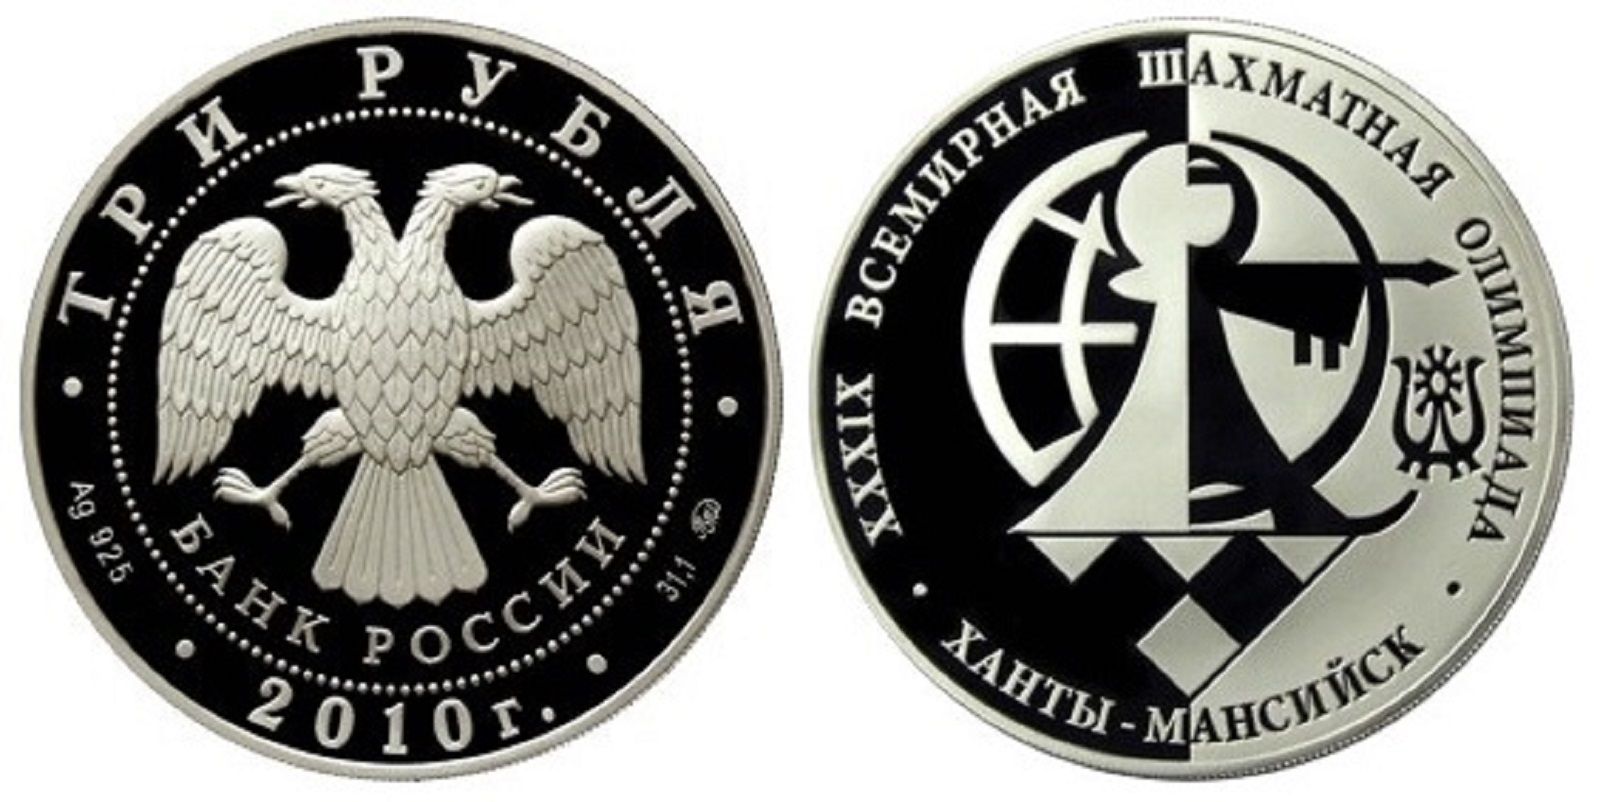 3 рубля урал. 3 Рубля 2010 год. Монета номиналом 3 рубля. Монета шахматы Камерун.